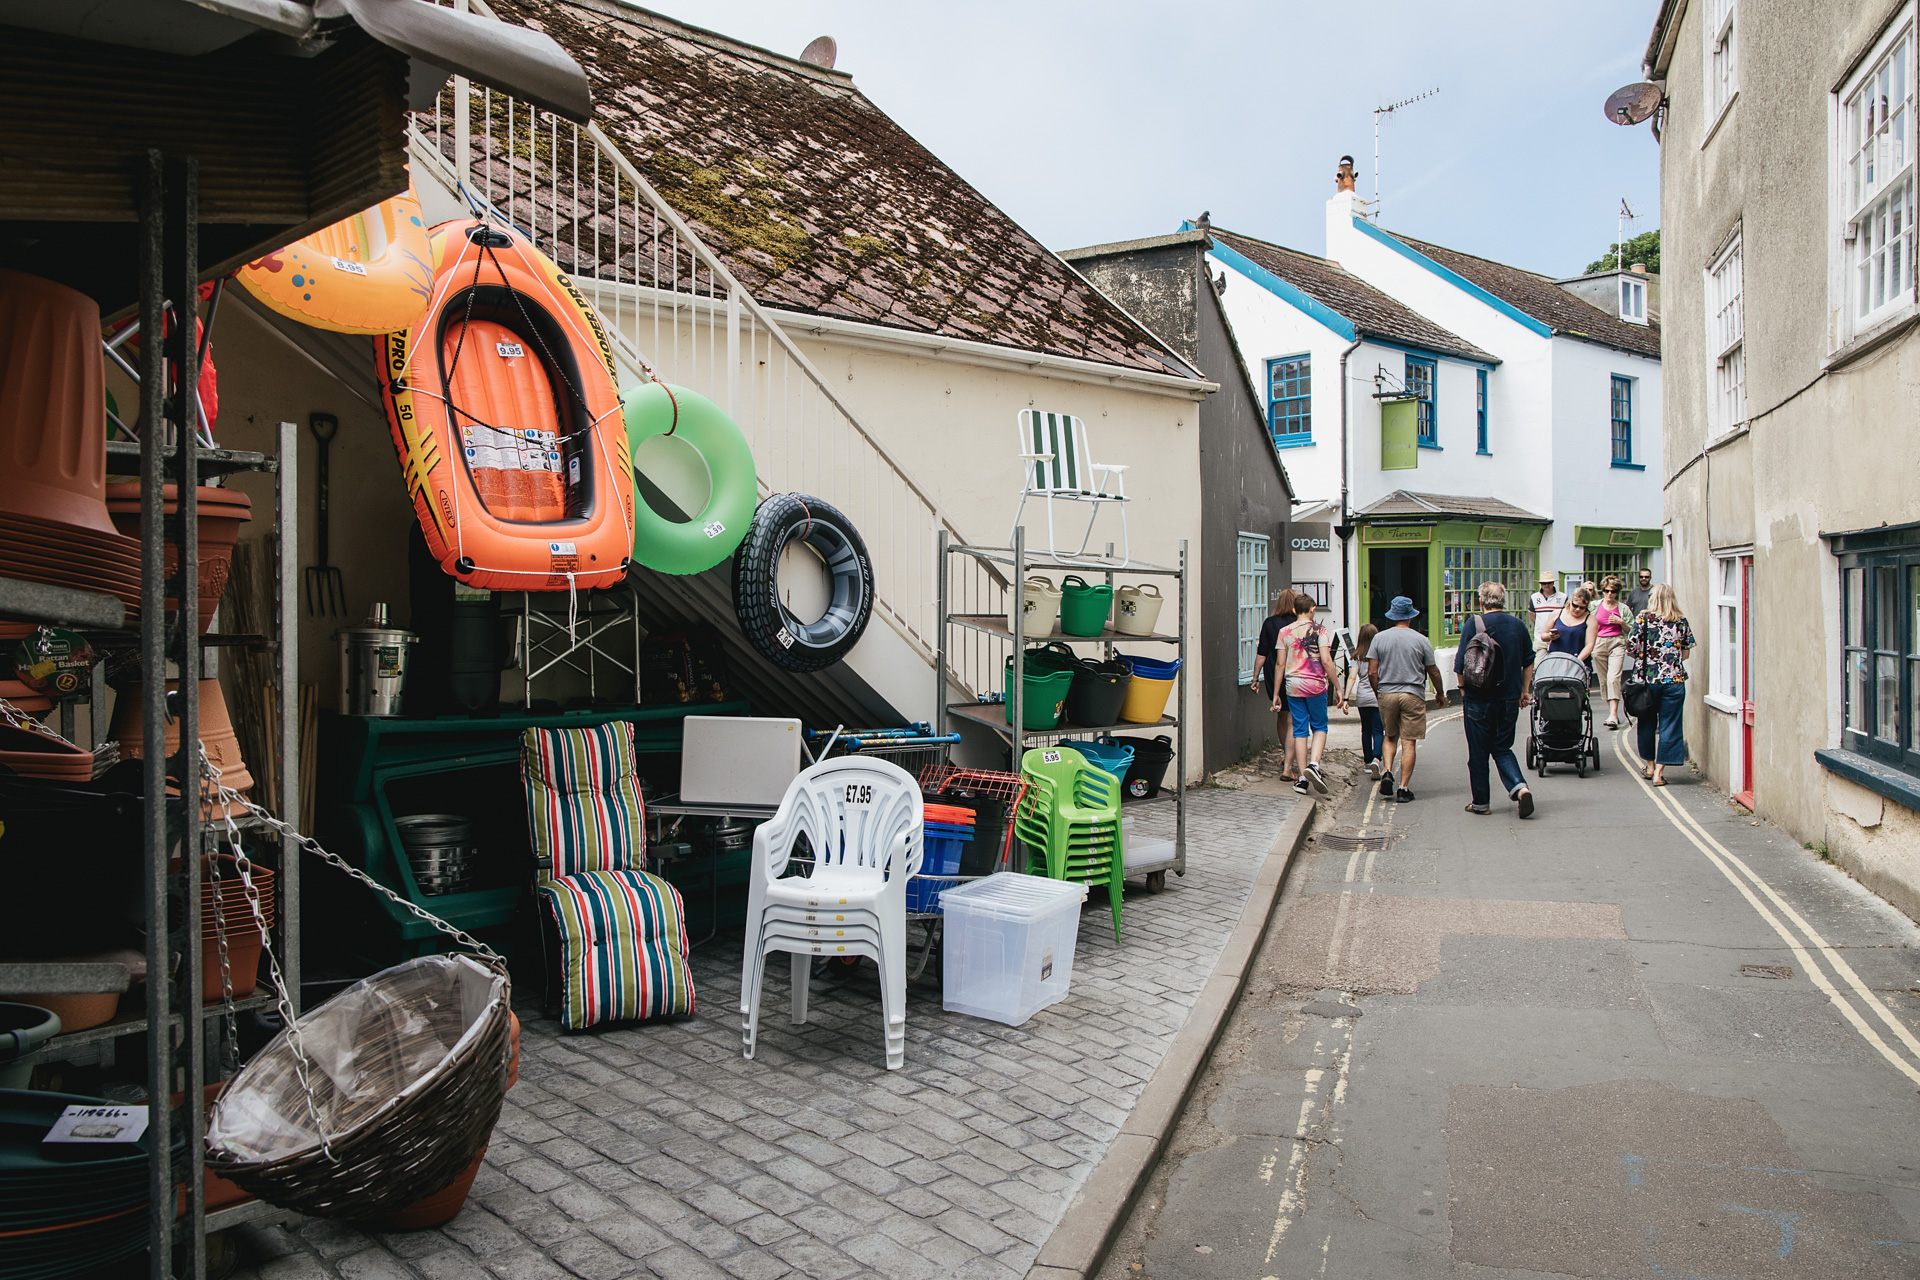 A seaside shop and side street in Lyme Regis